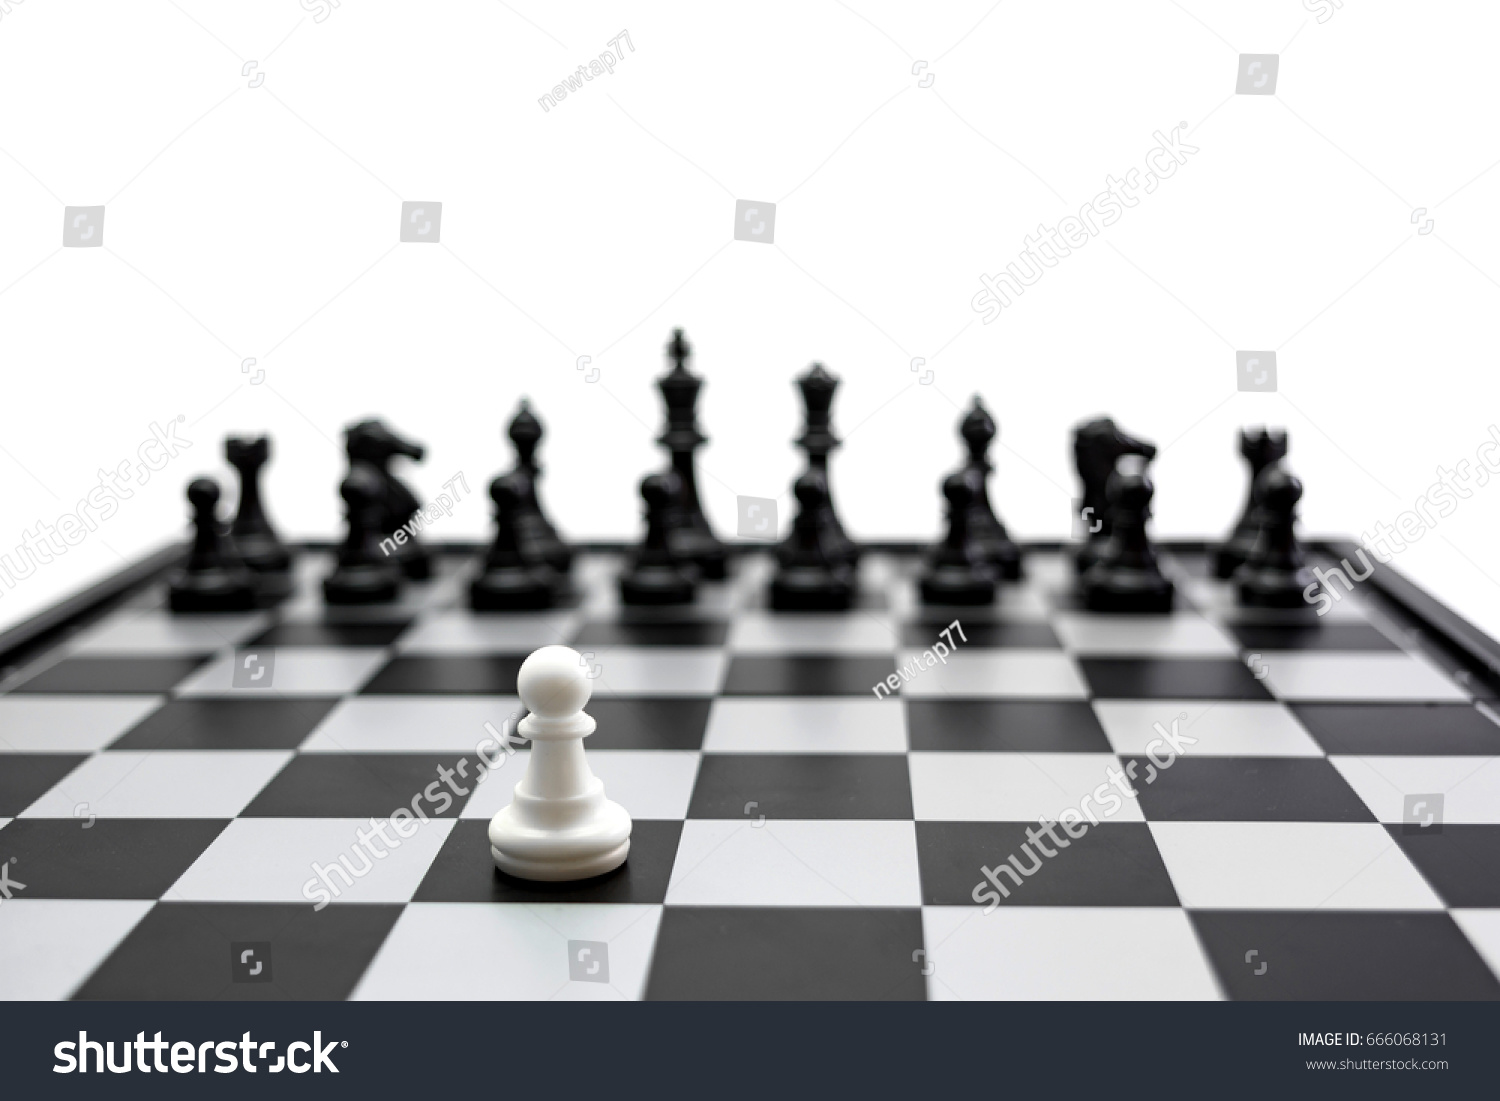 White Pawn Versus Black King Queen Royalty Free Stock Image